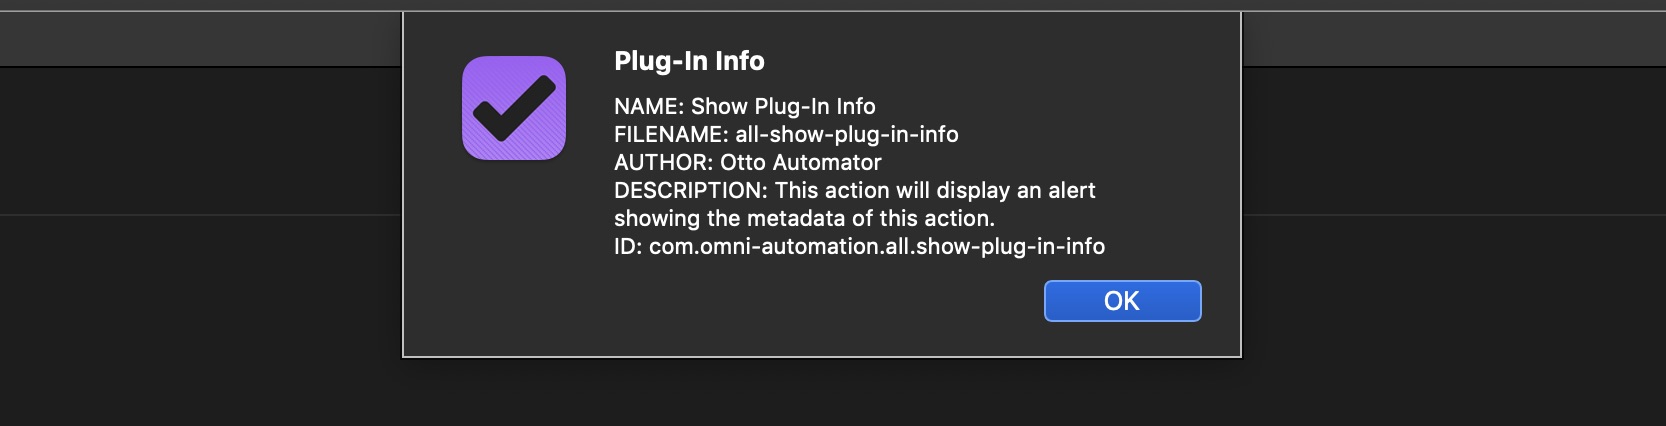 plug-in-action-info-alert